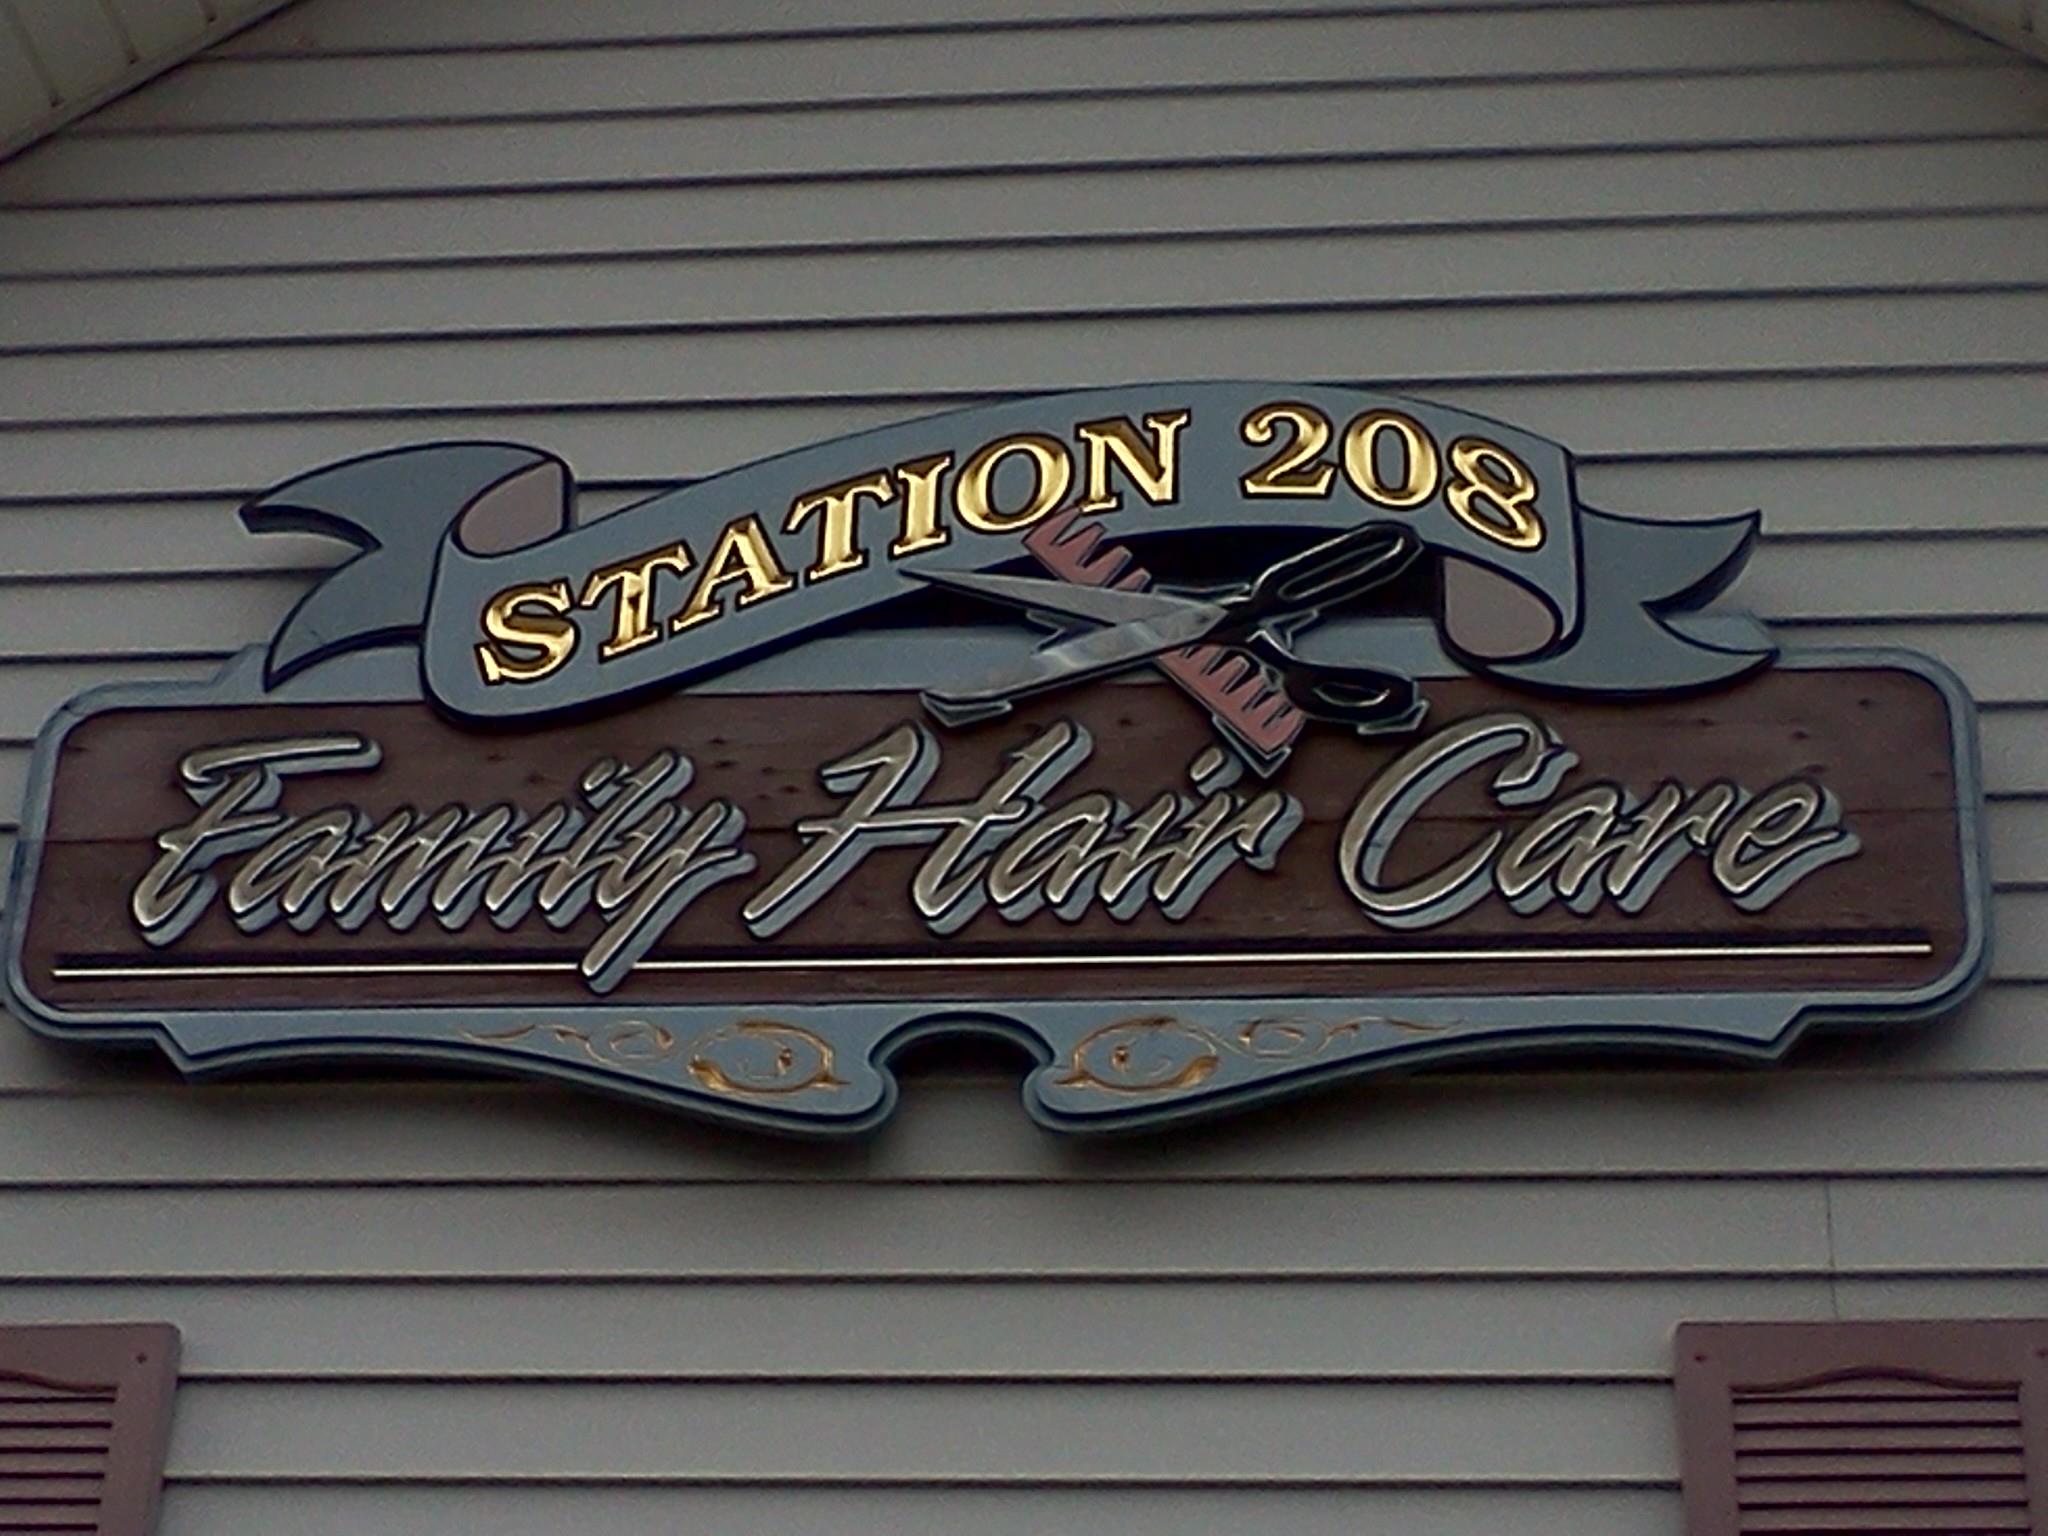 Station 208